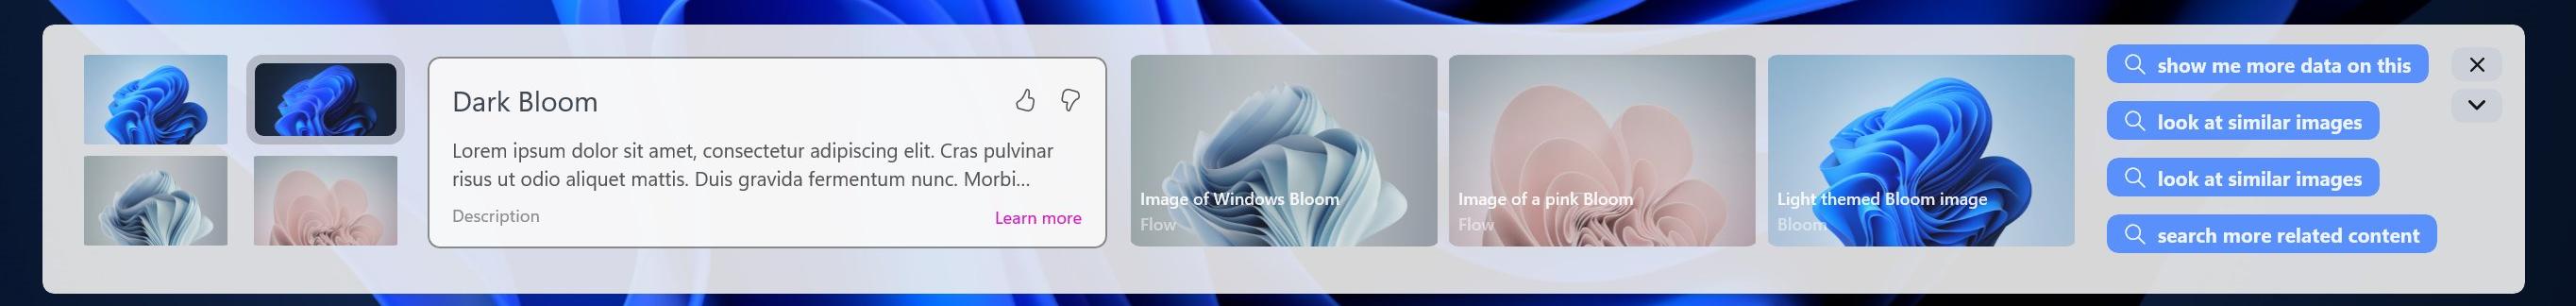 Windows 11 Desktop Spotlight Panel